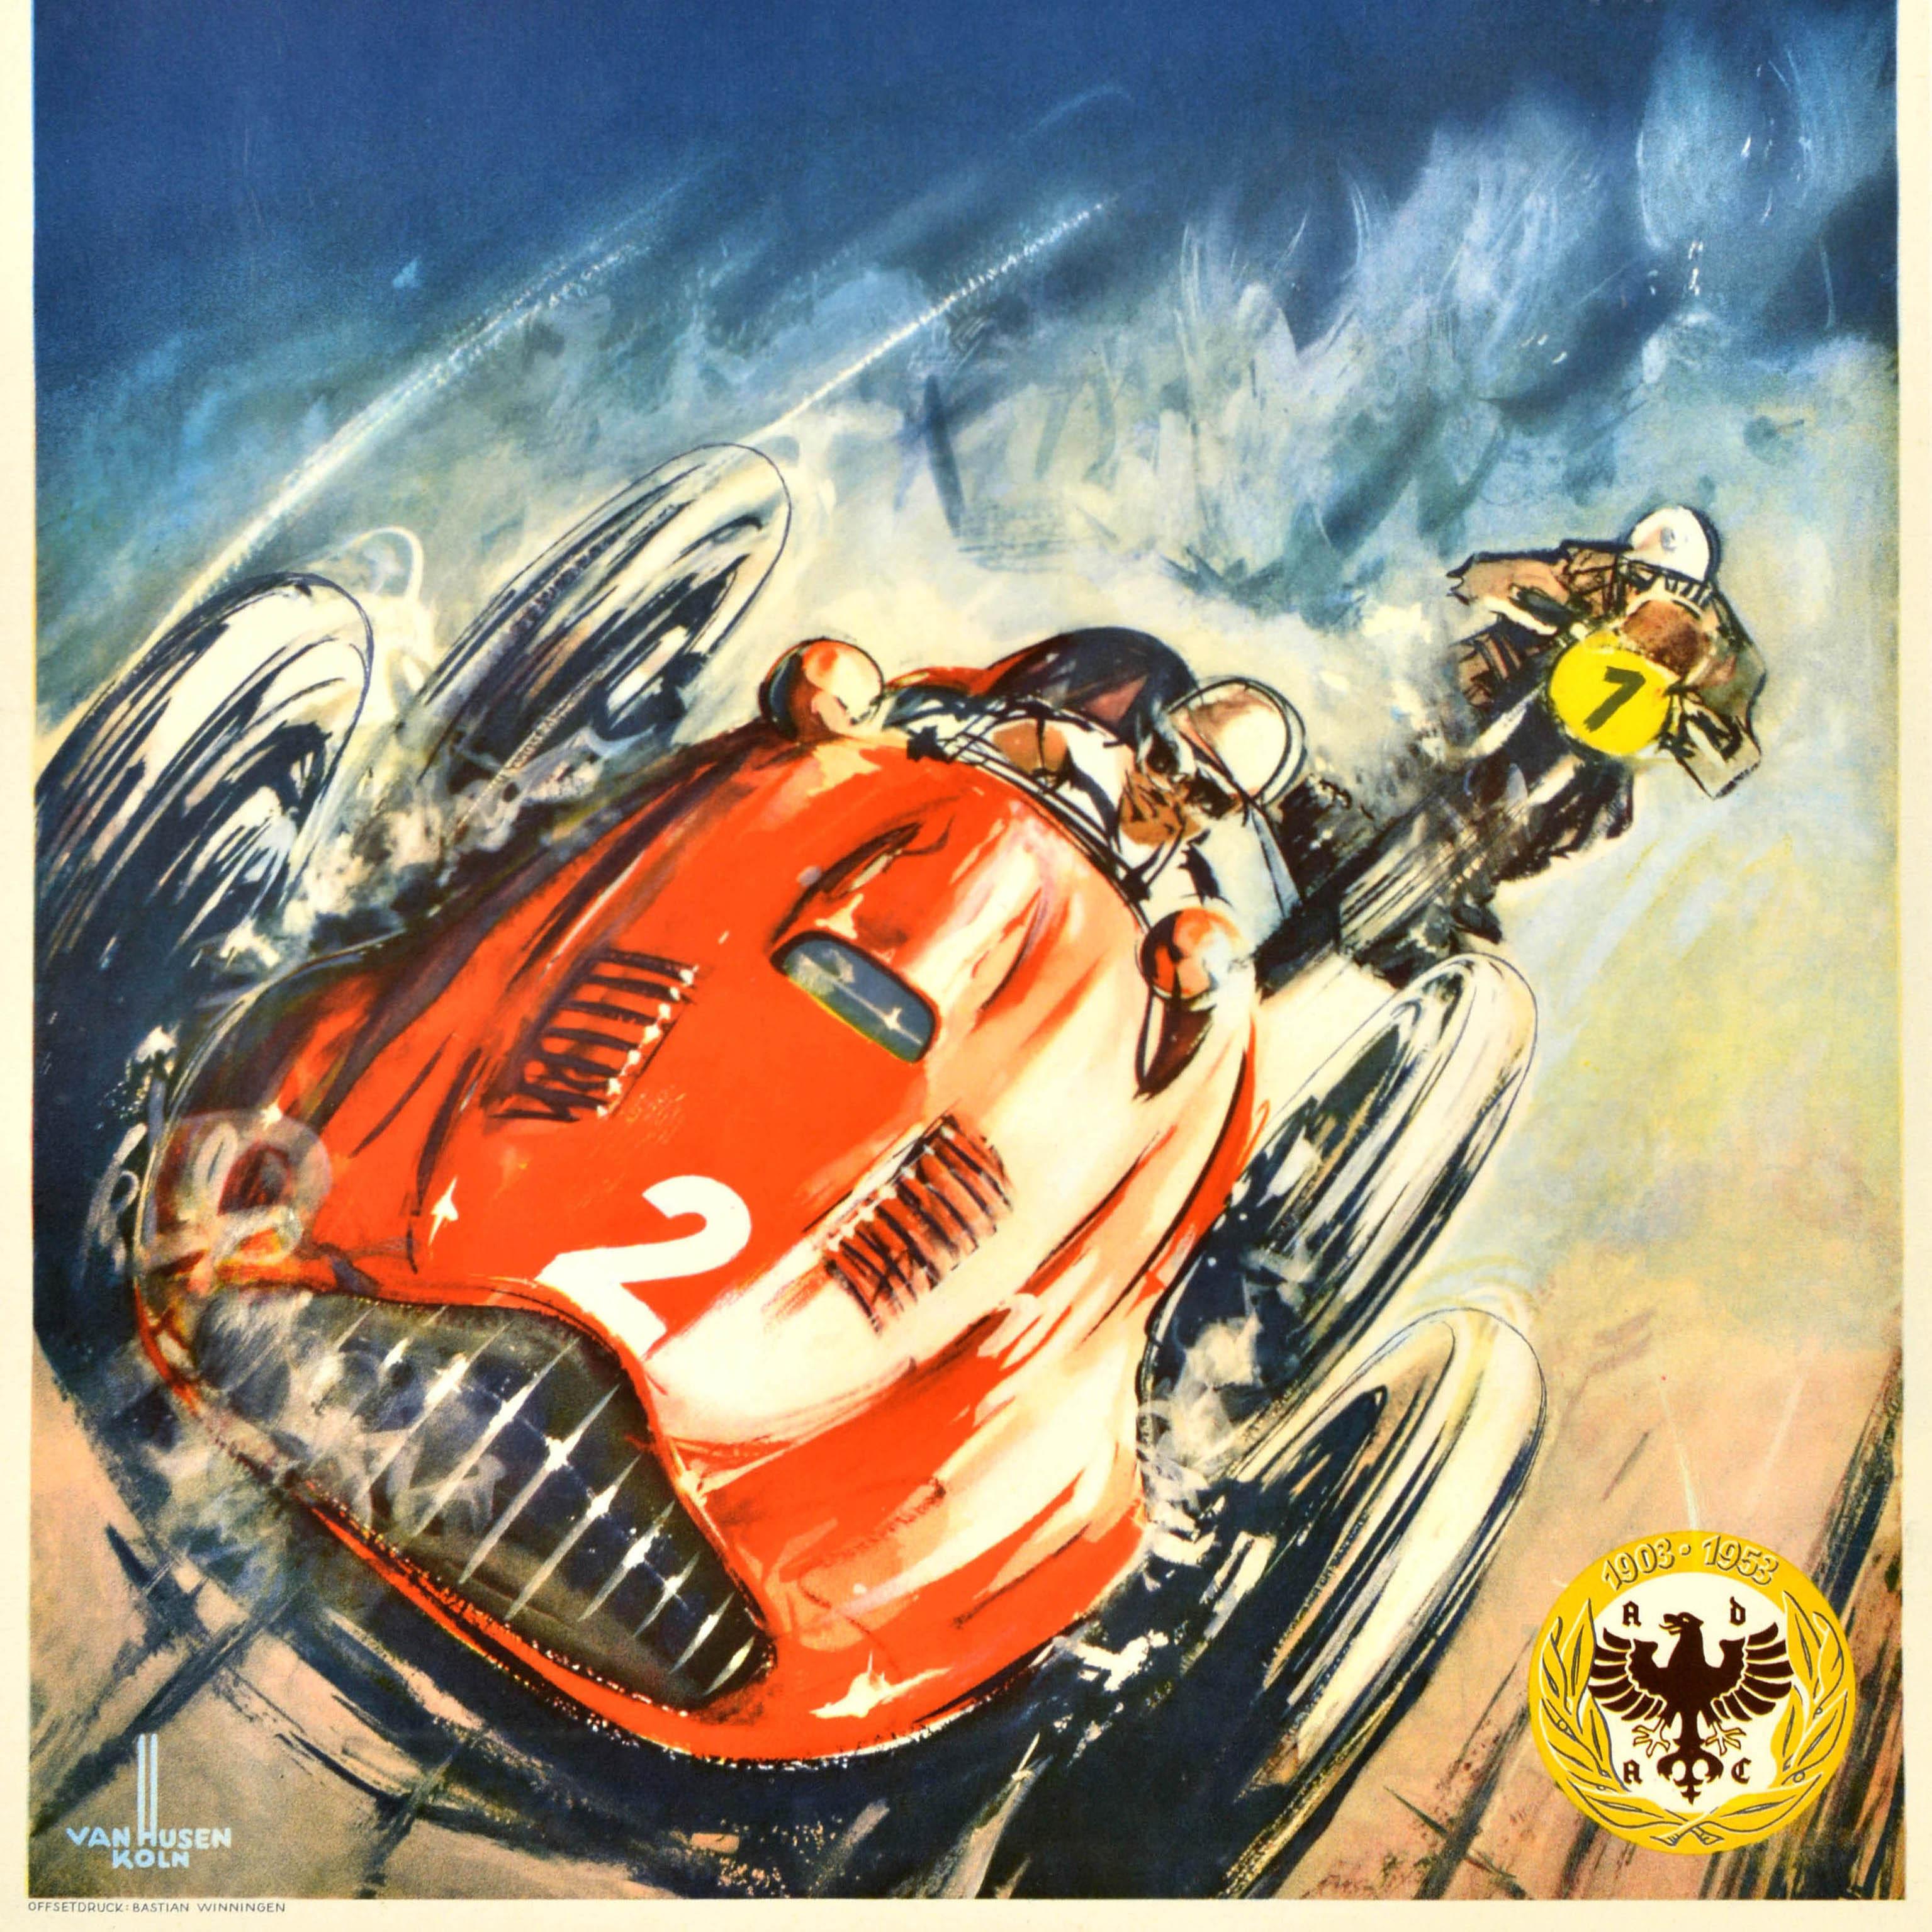 Original vintage motorsport poster for the XIX Internationales ADAC Eifel Rennen annual international motor race organised by the Allgemeiner Deutscher Automobil-Club (ADAC; established 1903) German Automobile Club on 26 August 1956 in Nurburgring